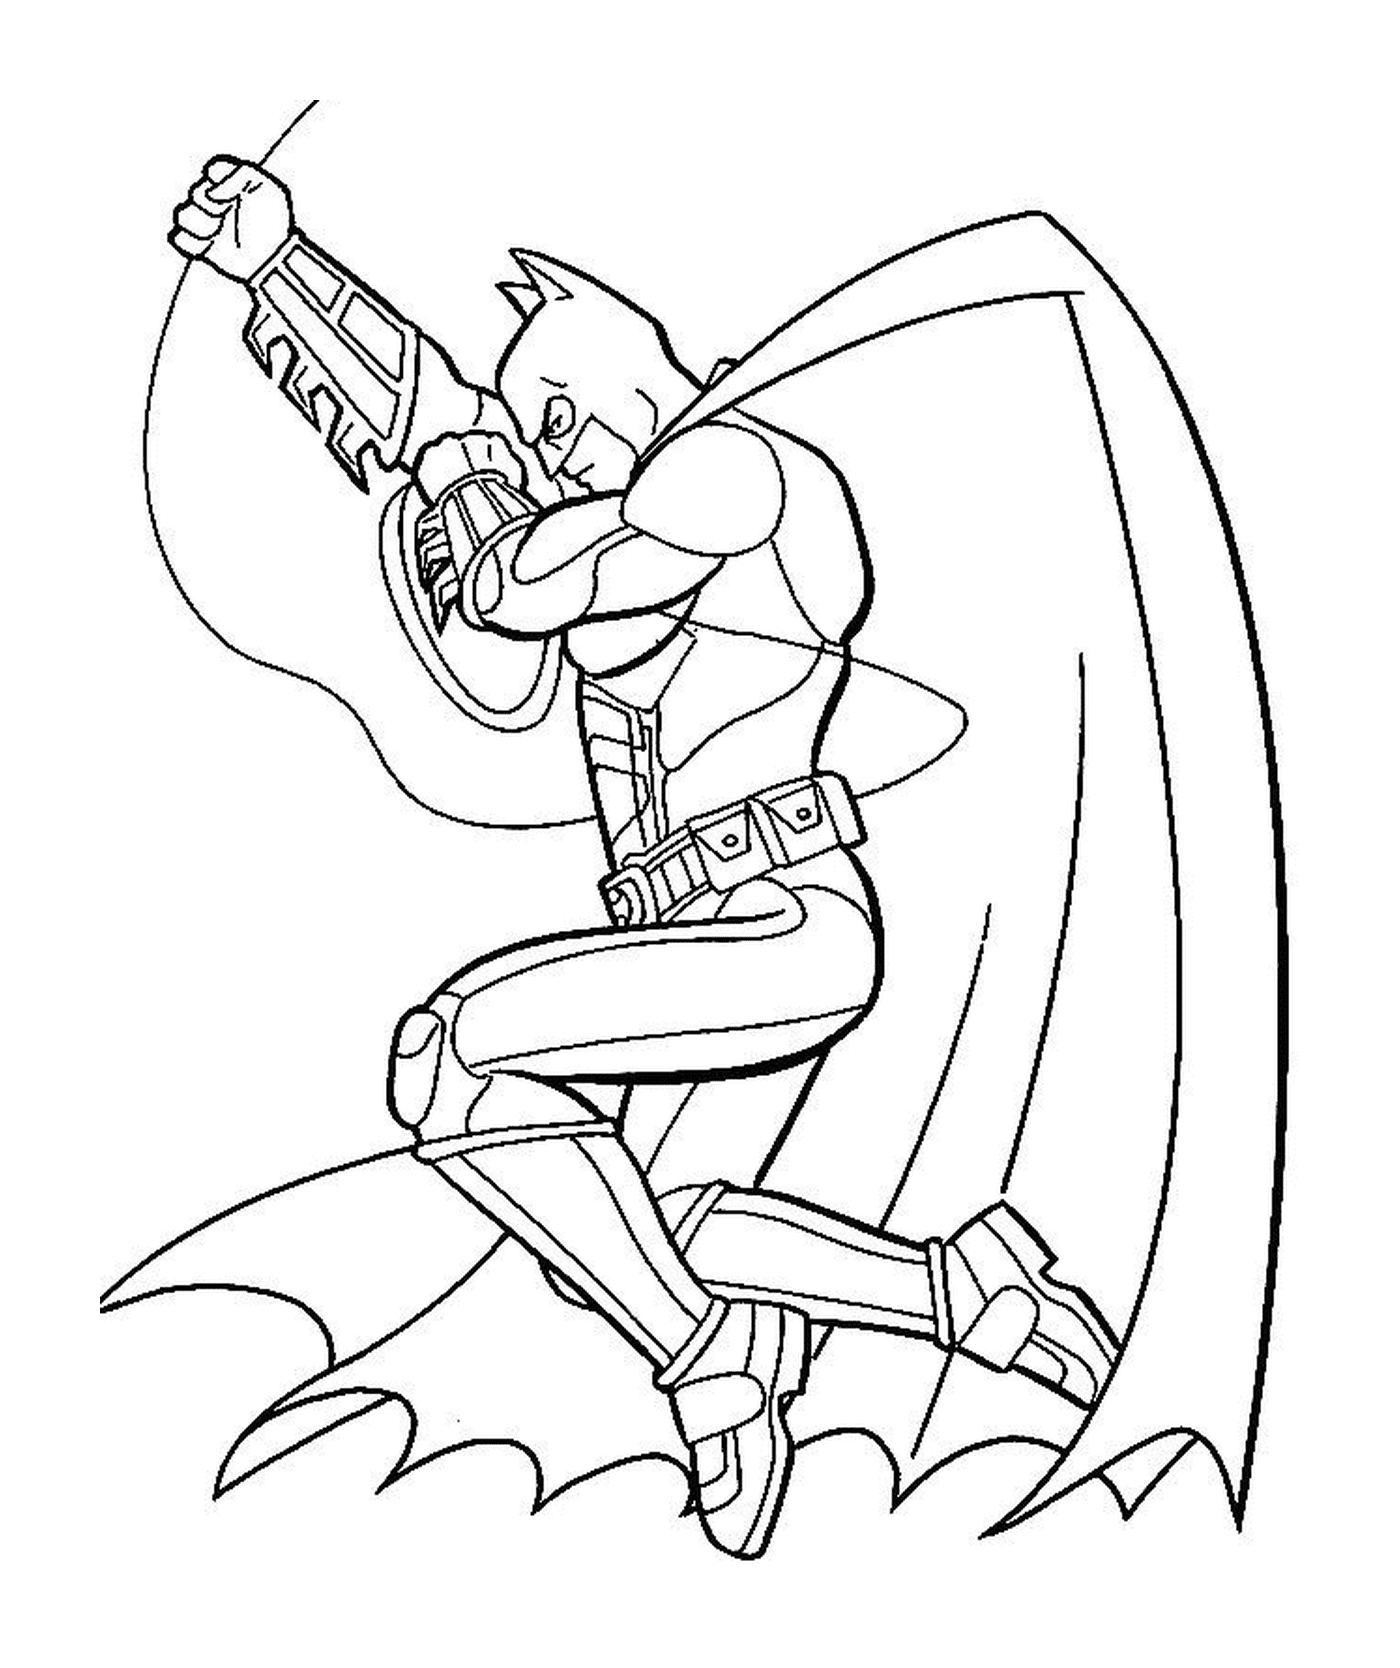  Profile batman holding a gun 